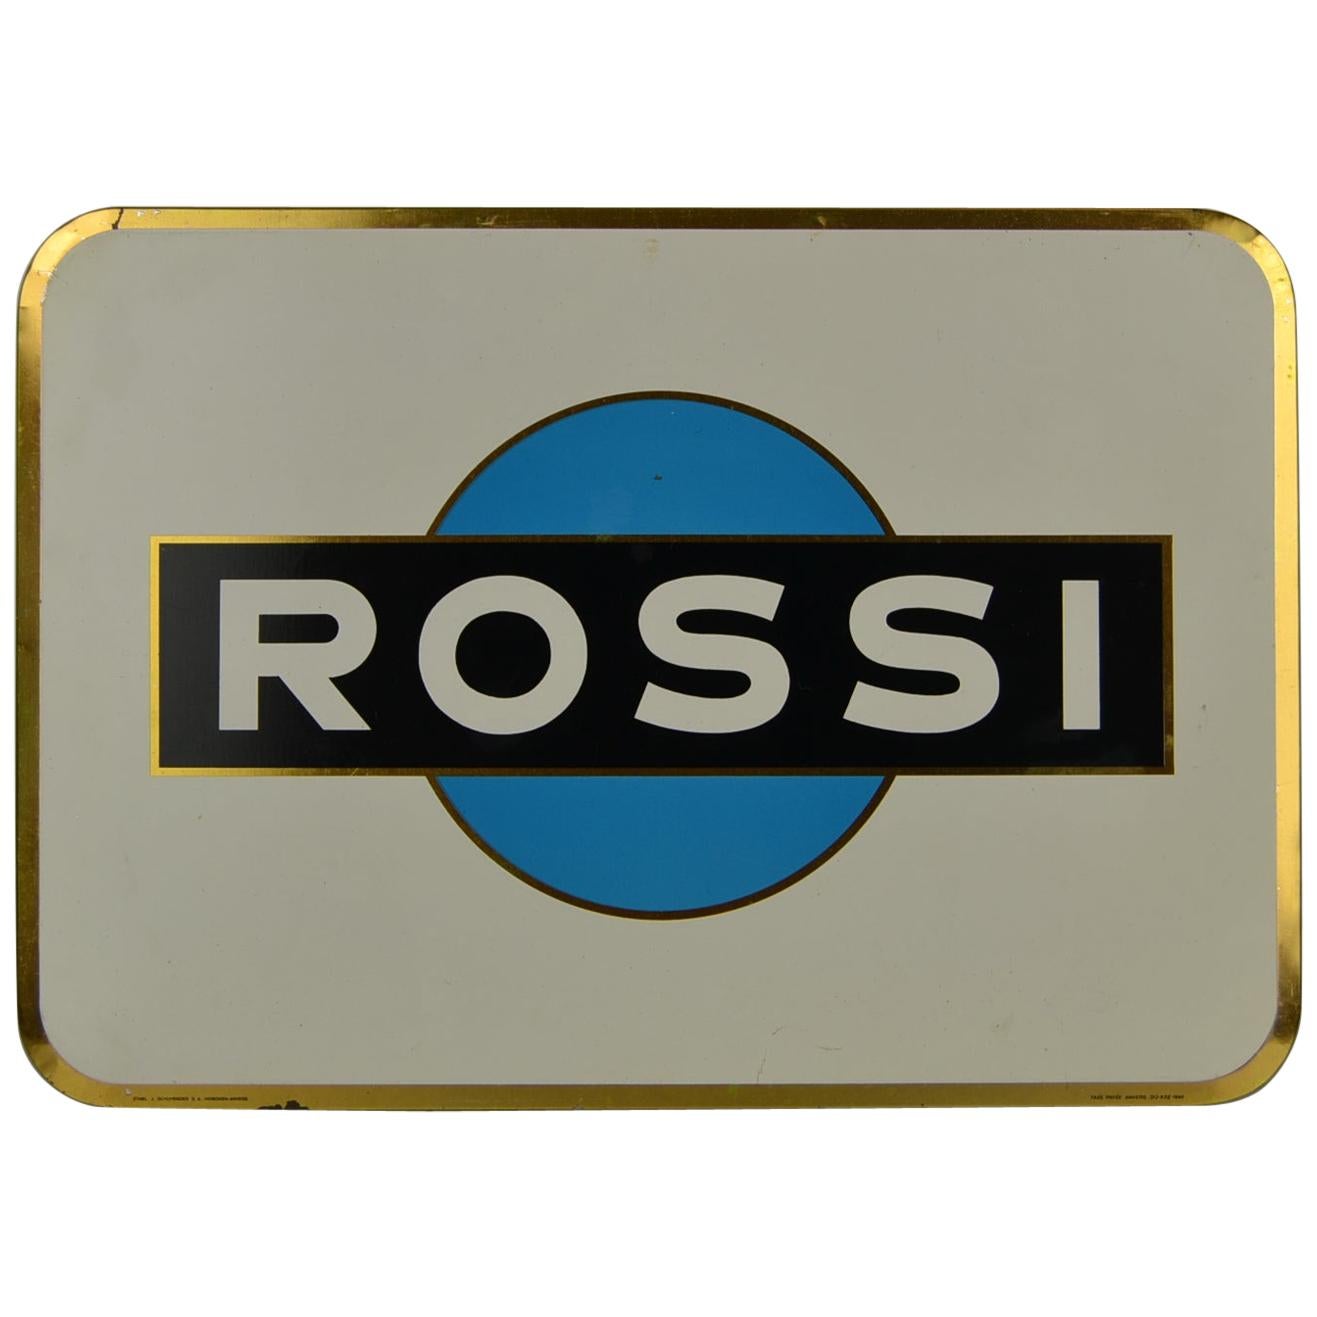 1961 Tin Advertising Sign ROSSI, Italian Apéritif Beverage